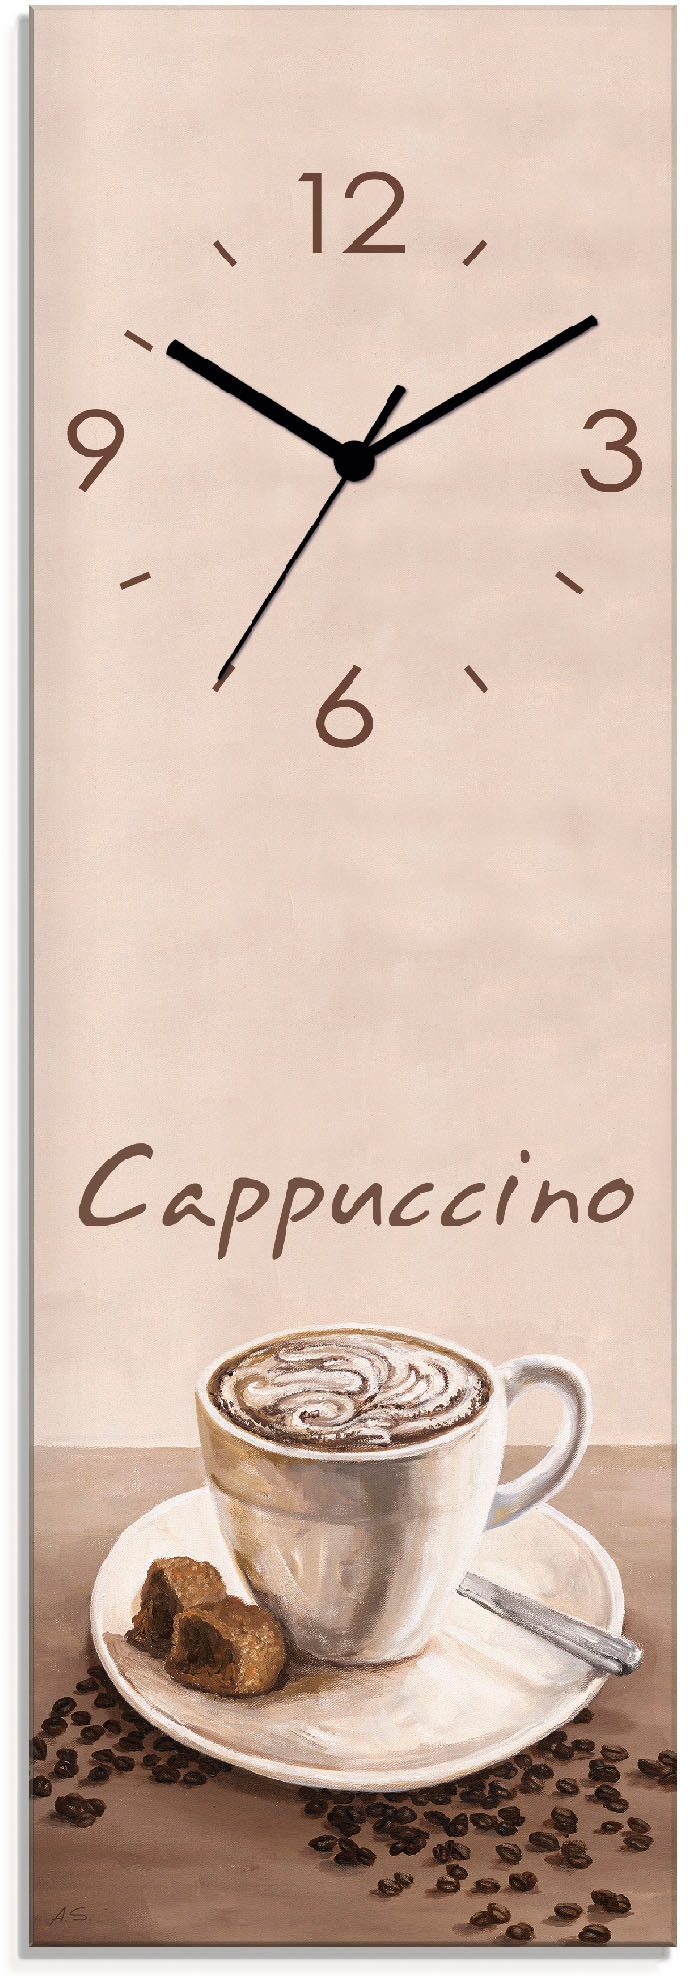 Artland Wanduhr »Cappuccino - Kaffee«, wahlweise mit Quarz- oder Funkuhrwerk, lautlos ohne Tickgeräusche